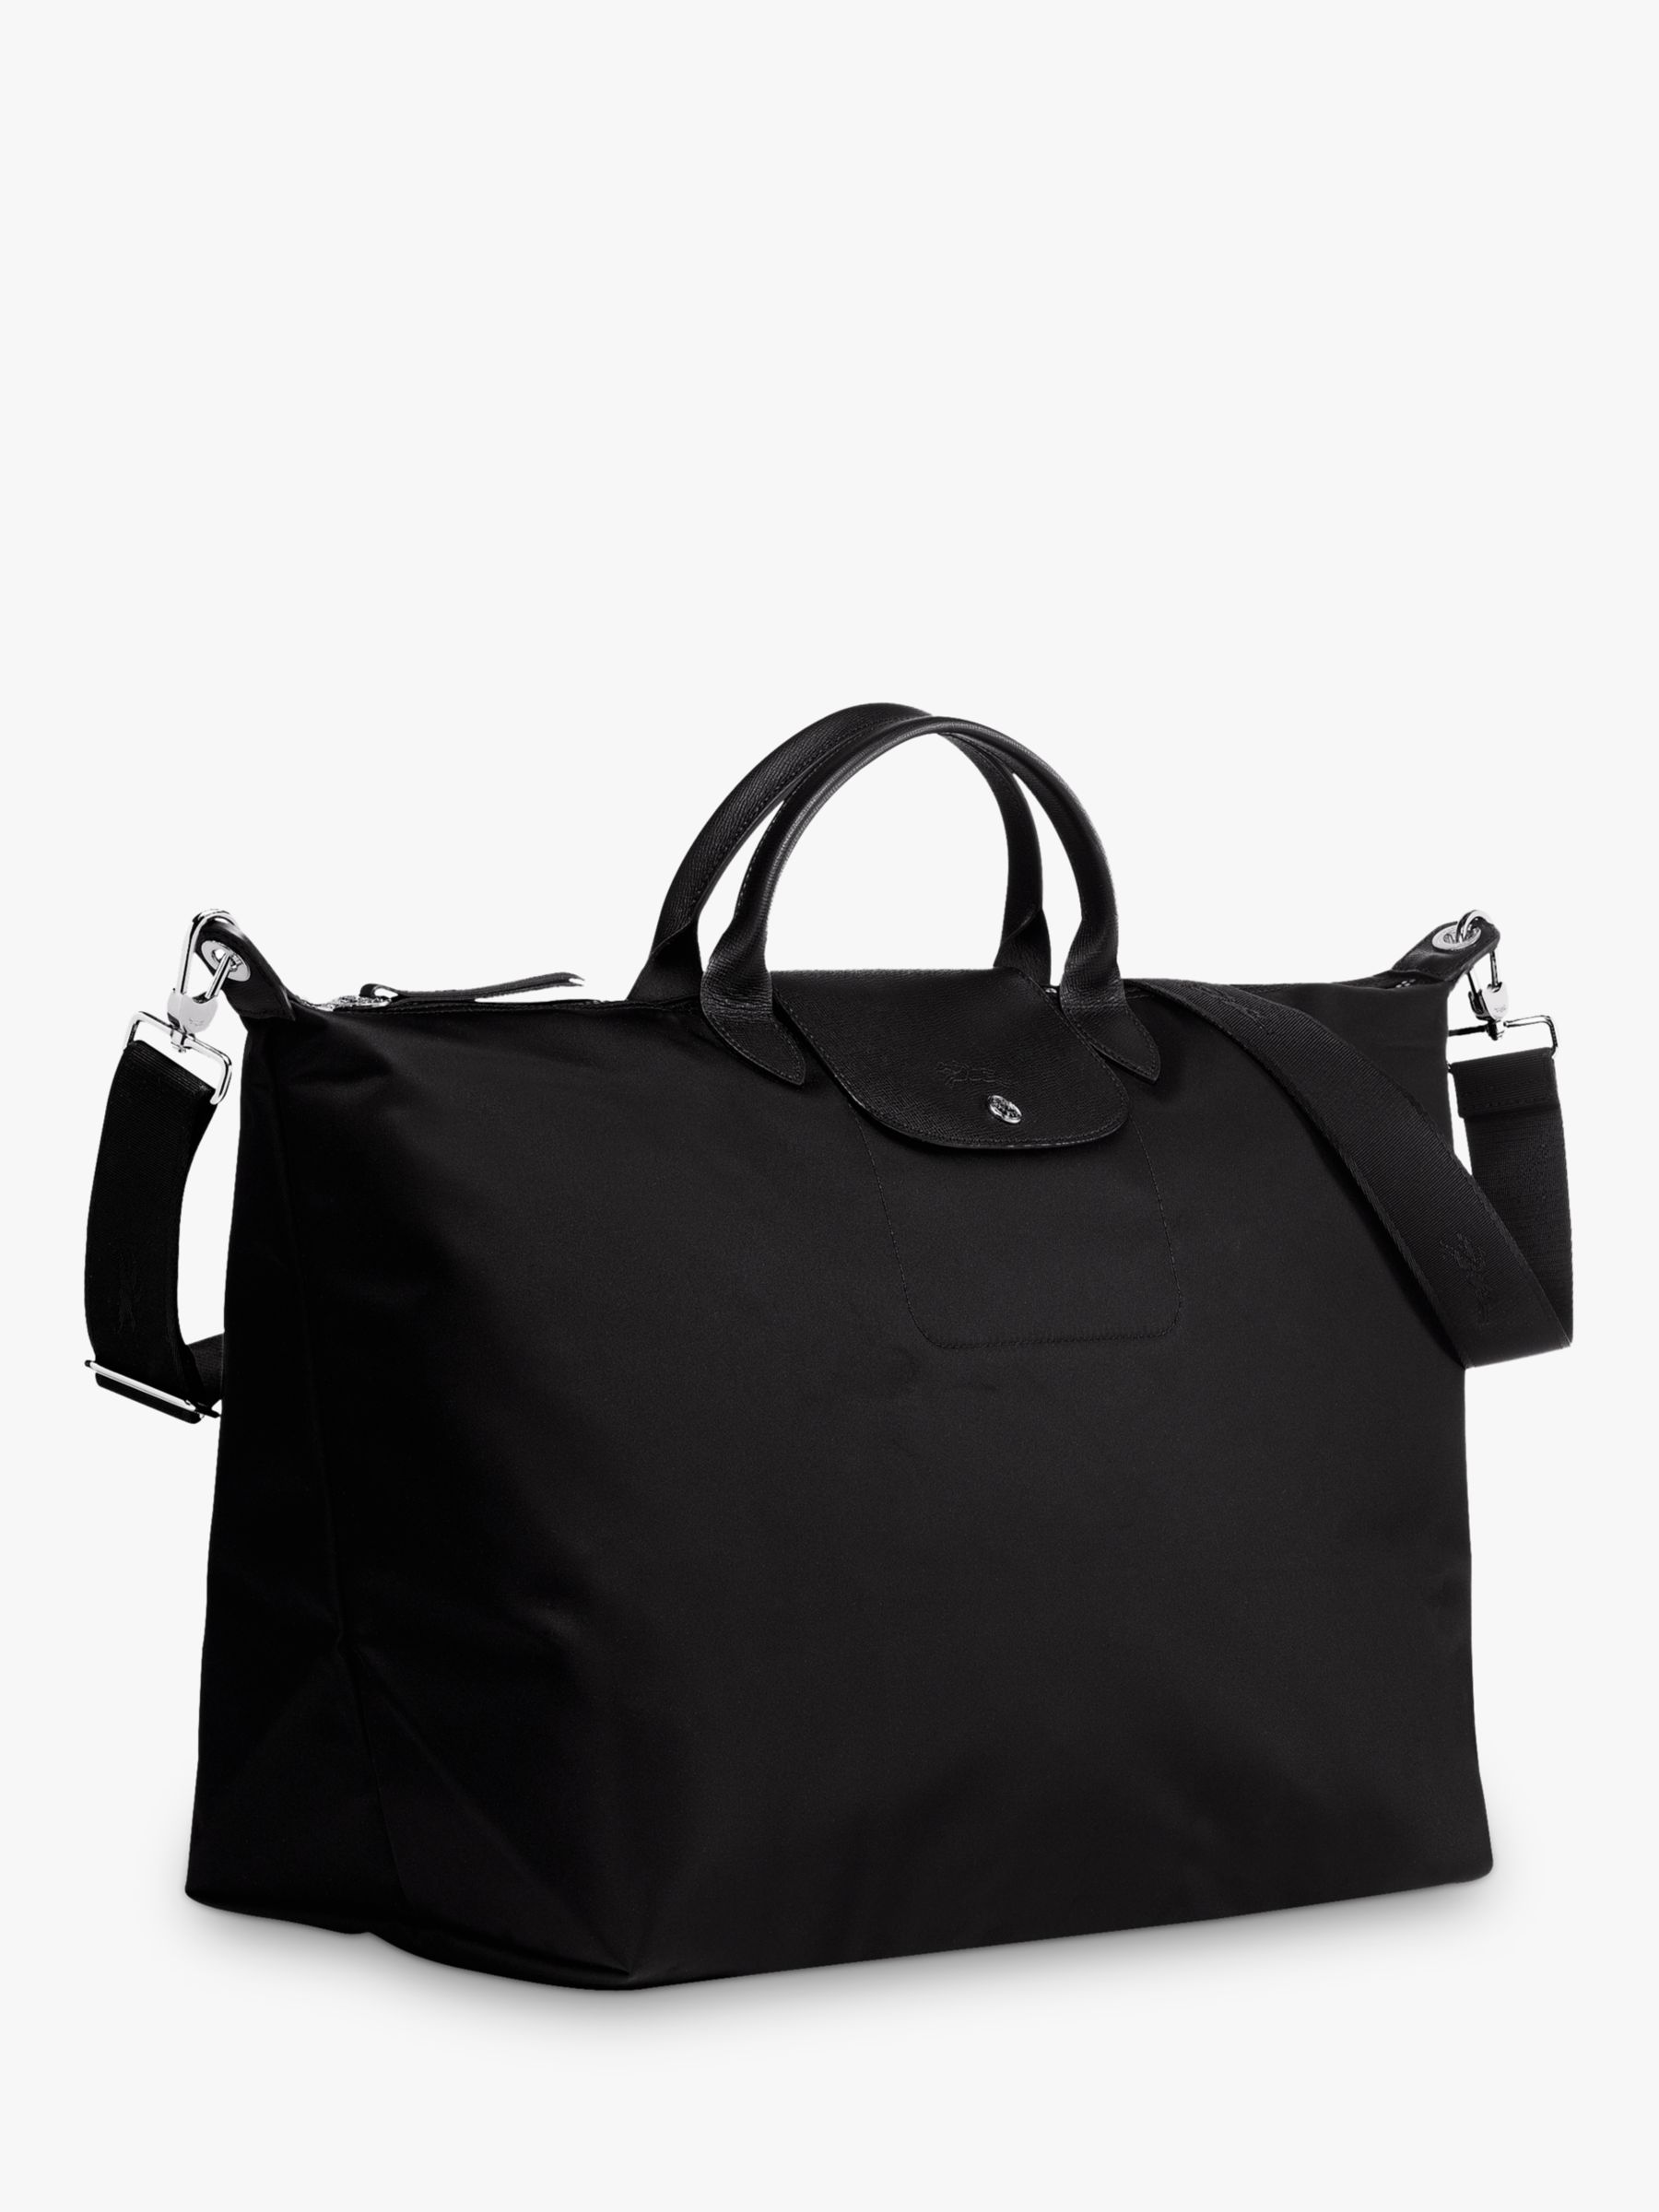 Longchamp Le Pliage Néo Travel Bag, Black at John Lewis & Partners